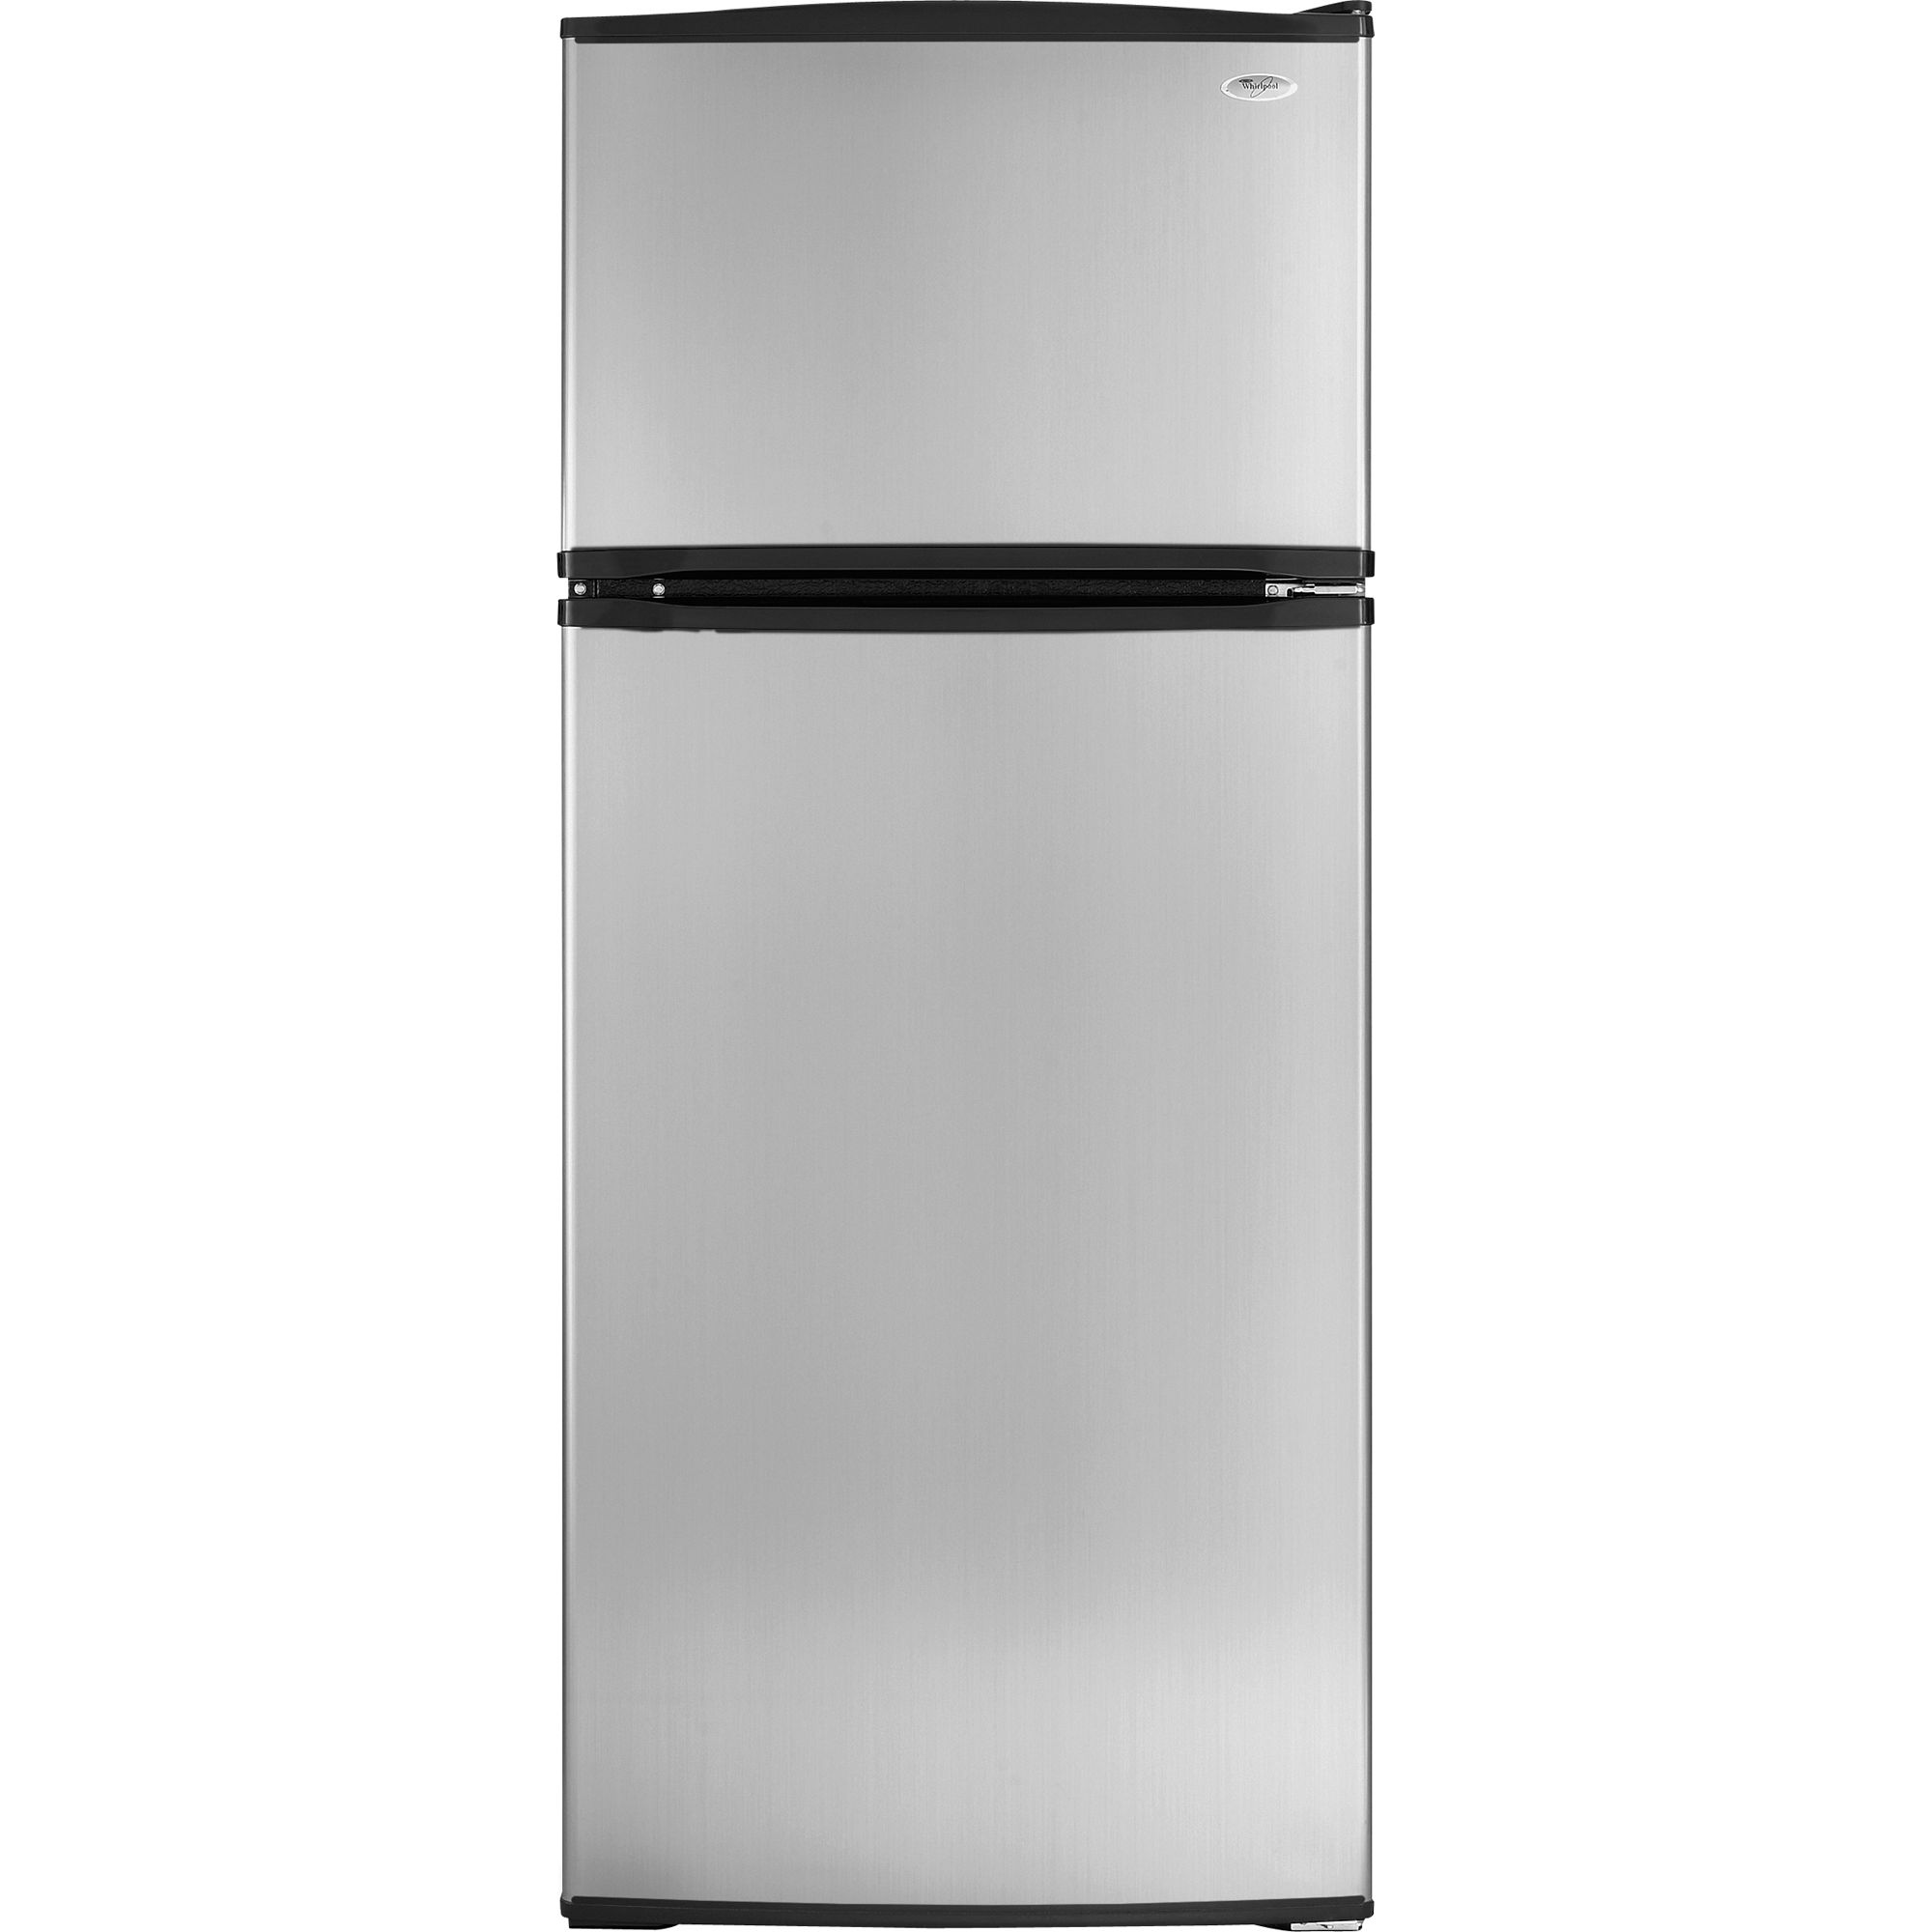 Whirlpool 17.6 cu. ft. Top Freezer Refrigerator w/ Ice Maker